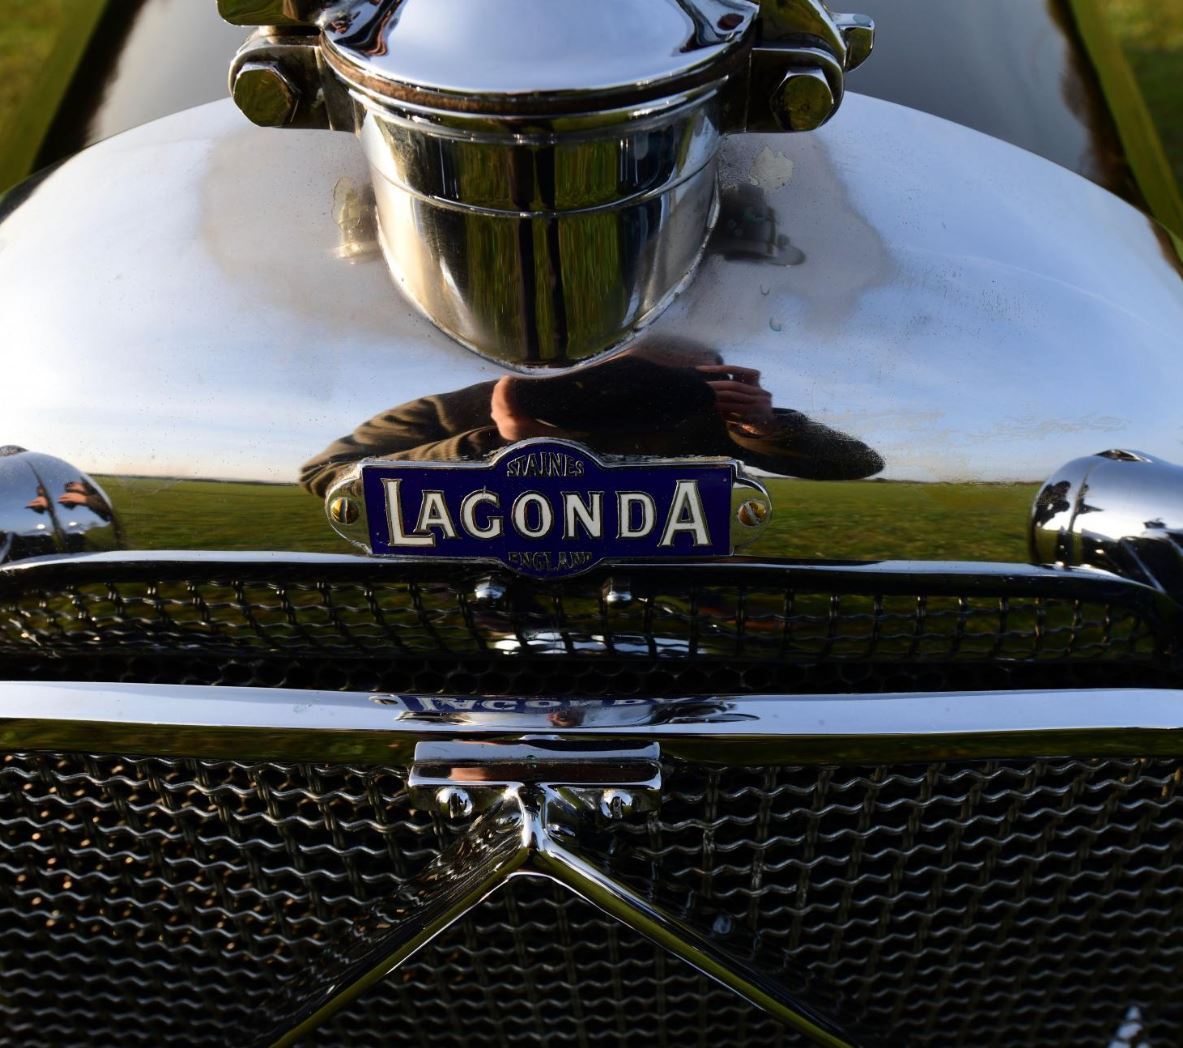 Lagonda 2 litre onn7vptkjiux48z azqhi